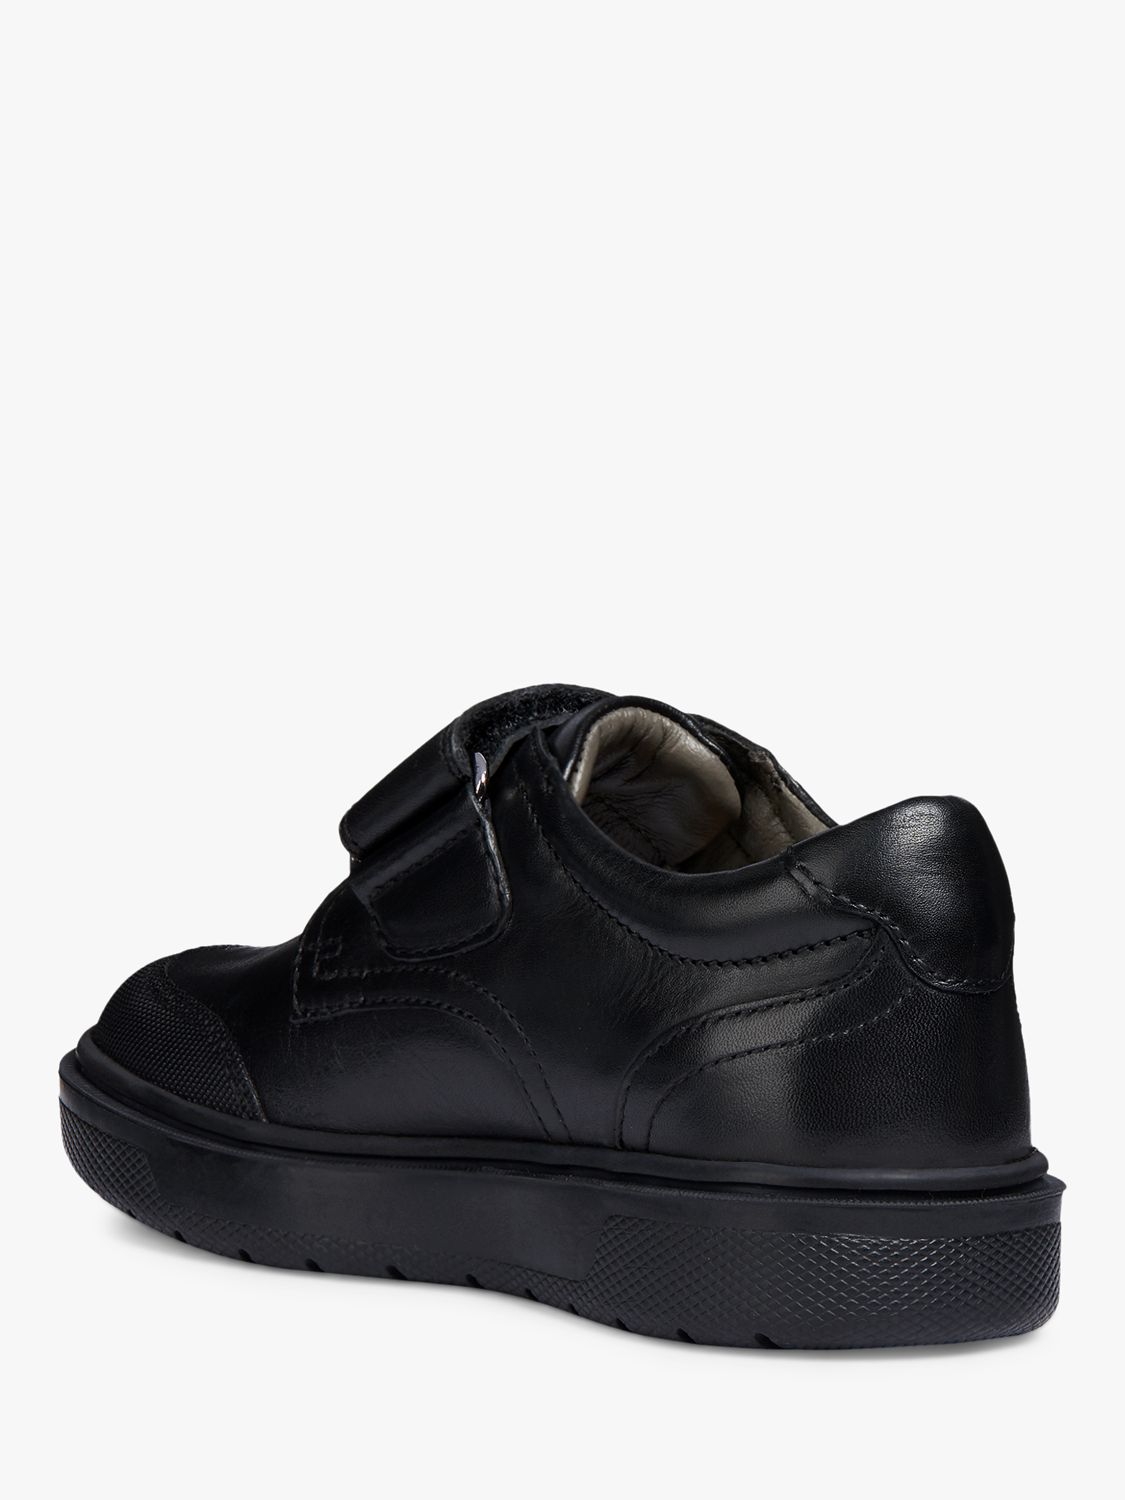 Geox Kids' Riddock Riptape School Shoes, Black, 27